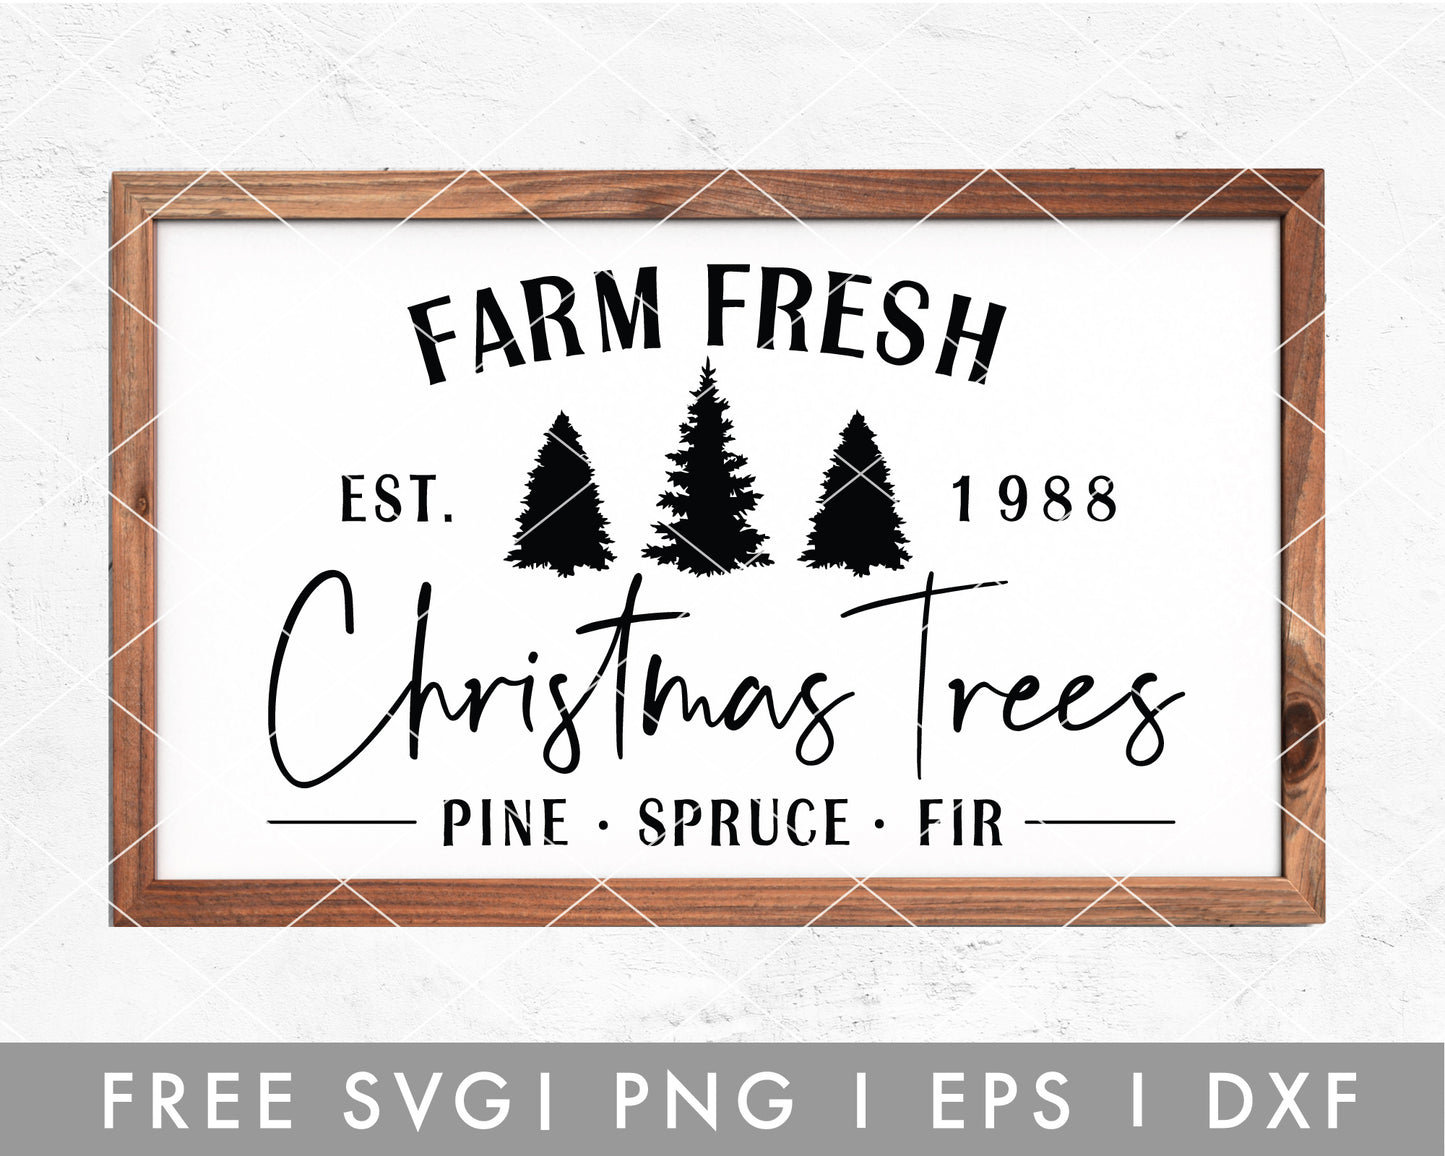 FREE Christmas Tree Farmsign SVG